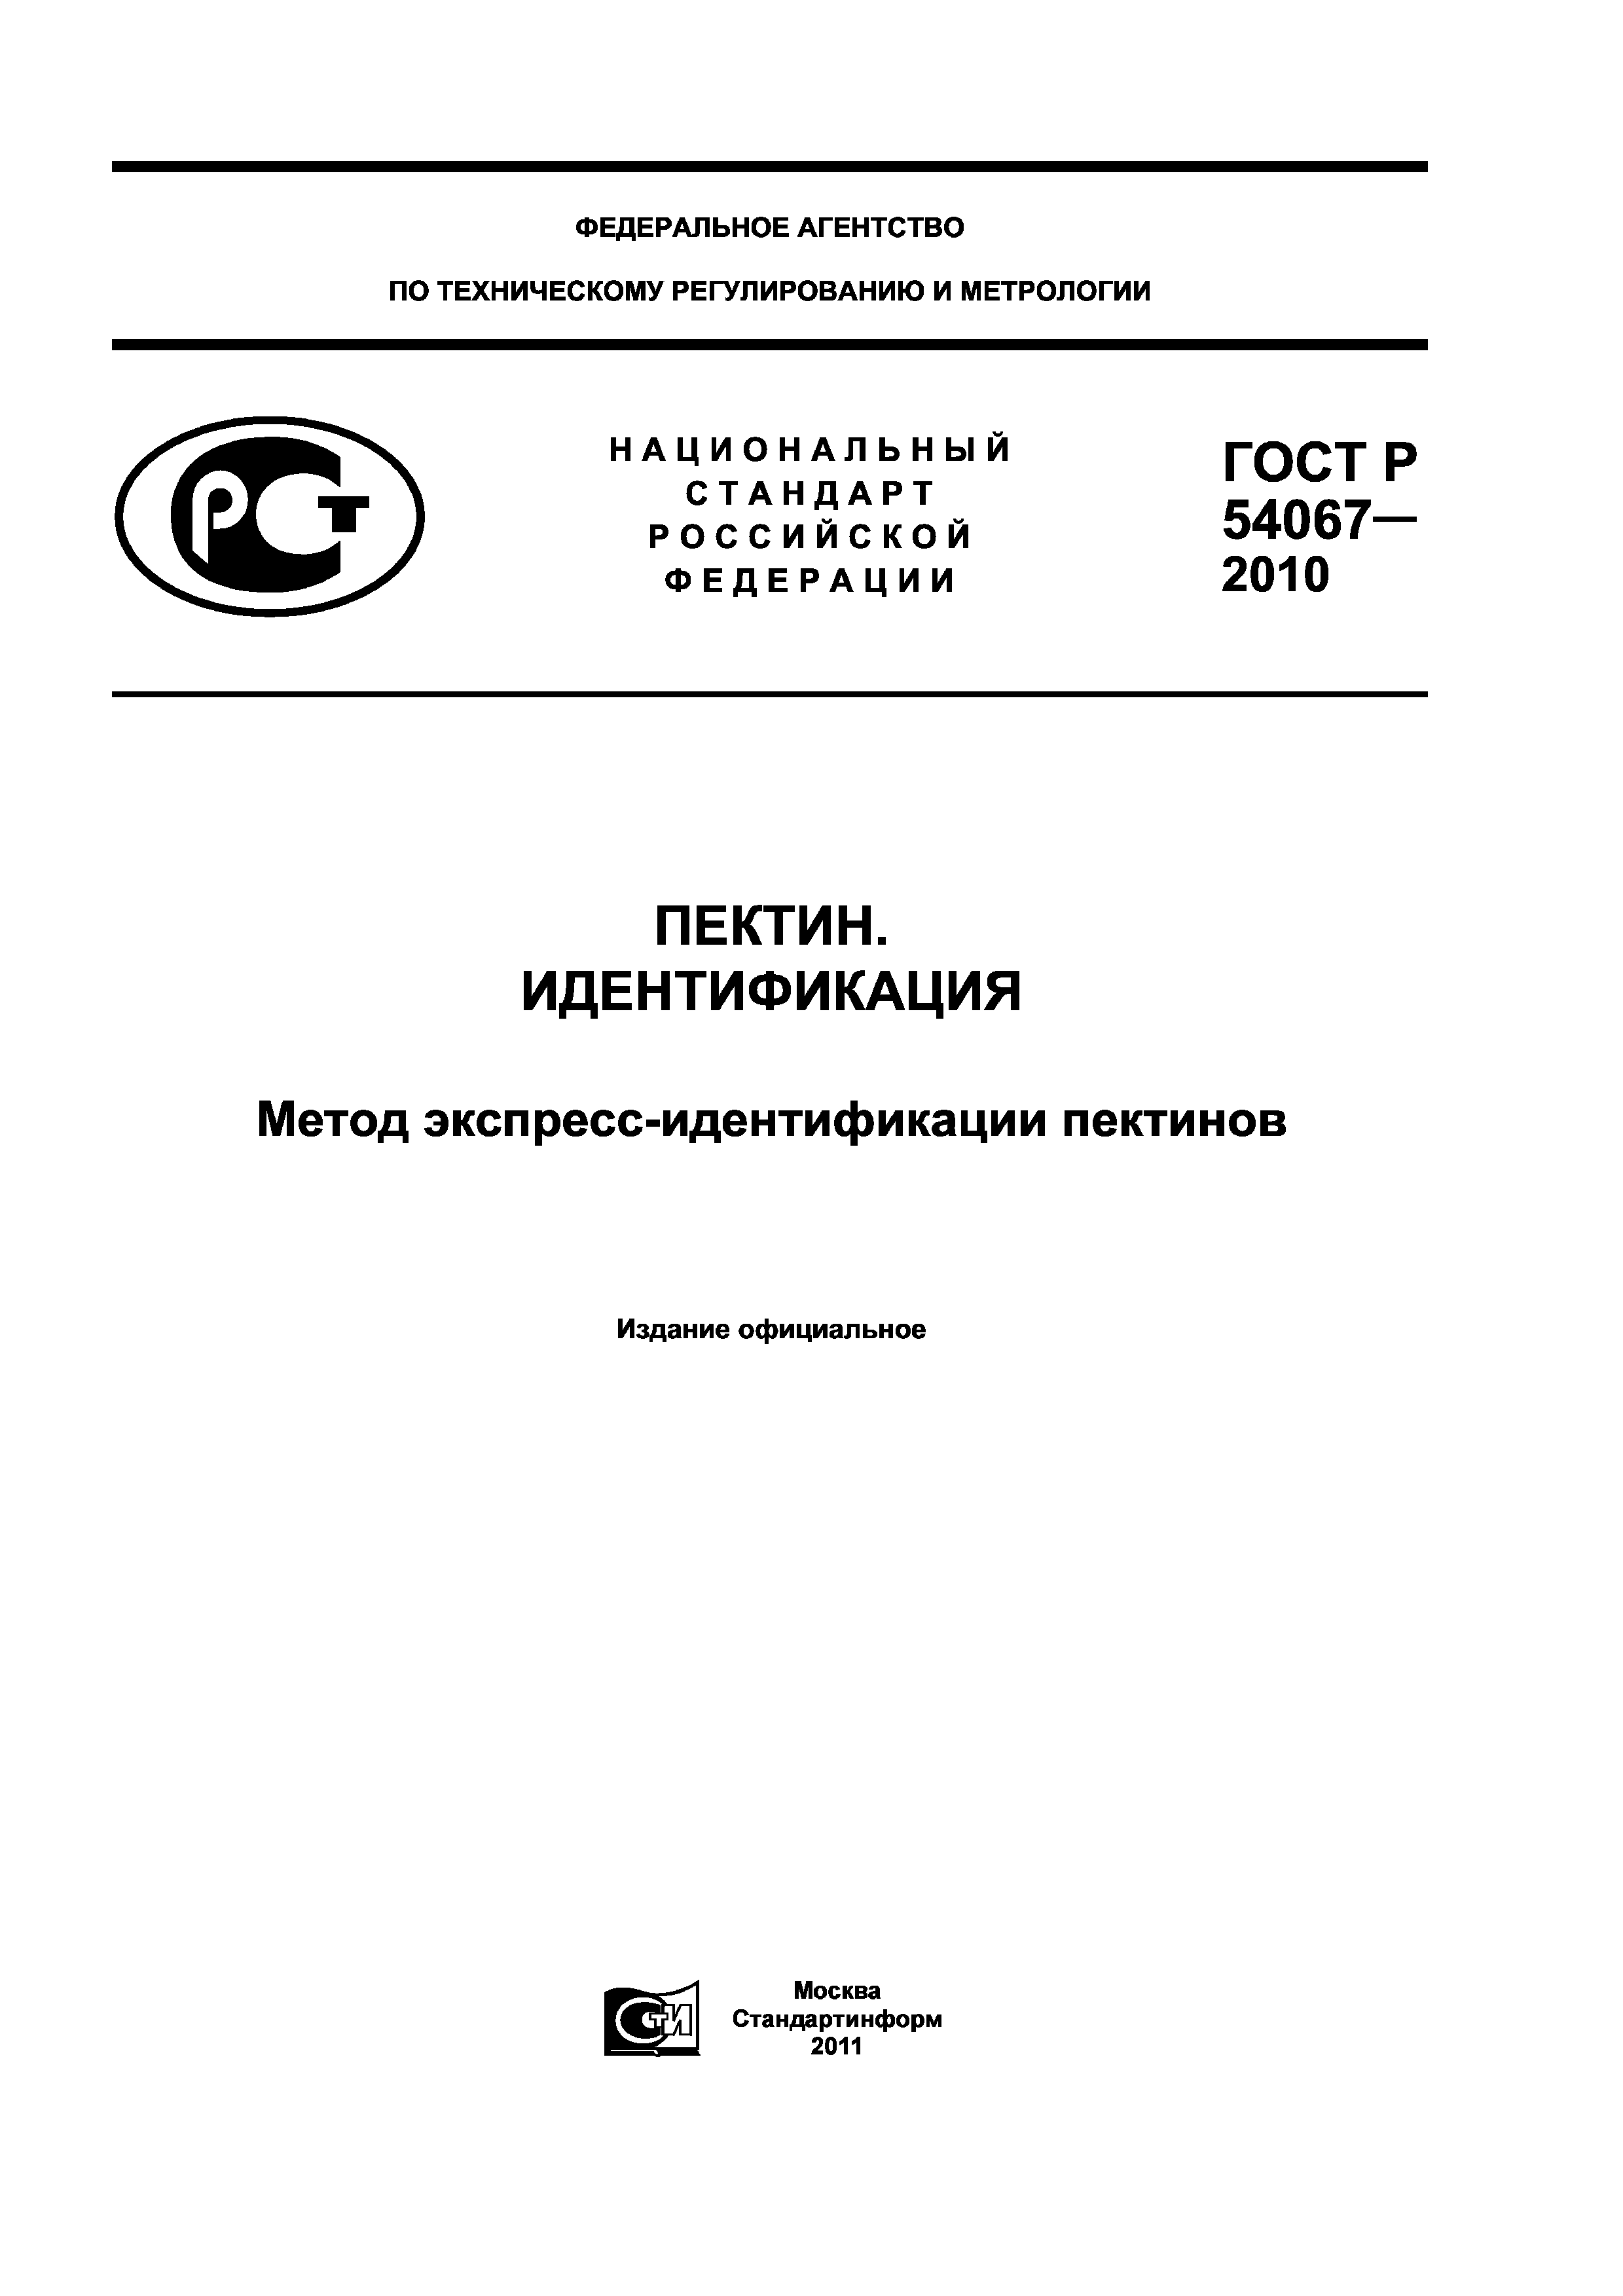 ГОСТ Р 54067-2010